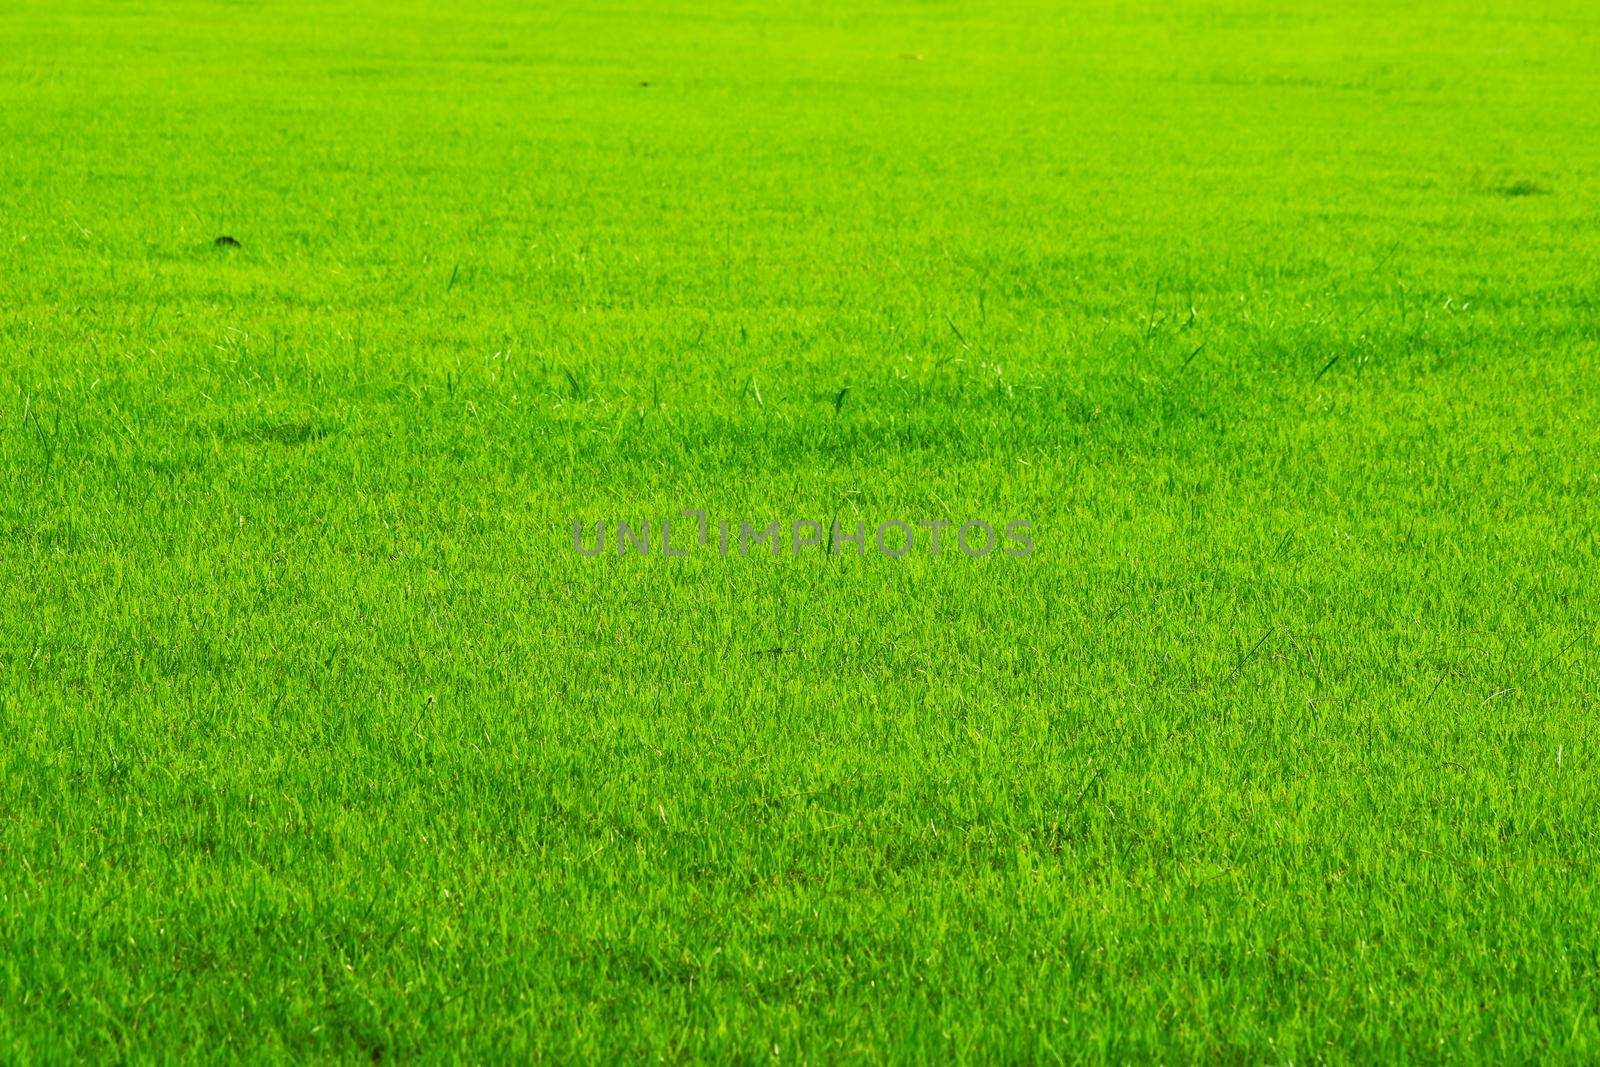 nature fresh green grass in the field background by Darkfox